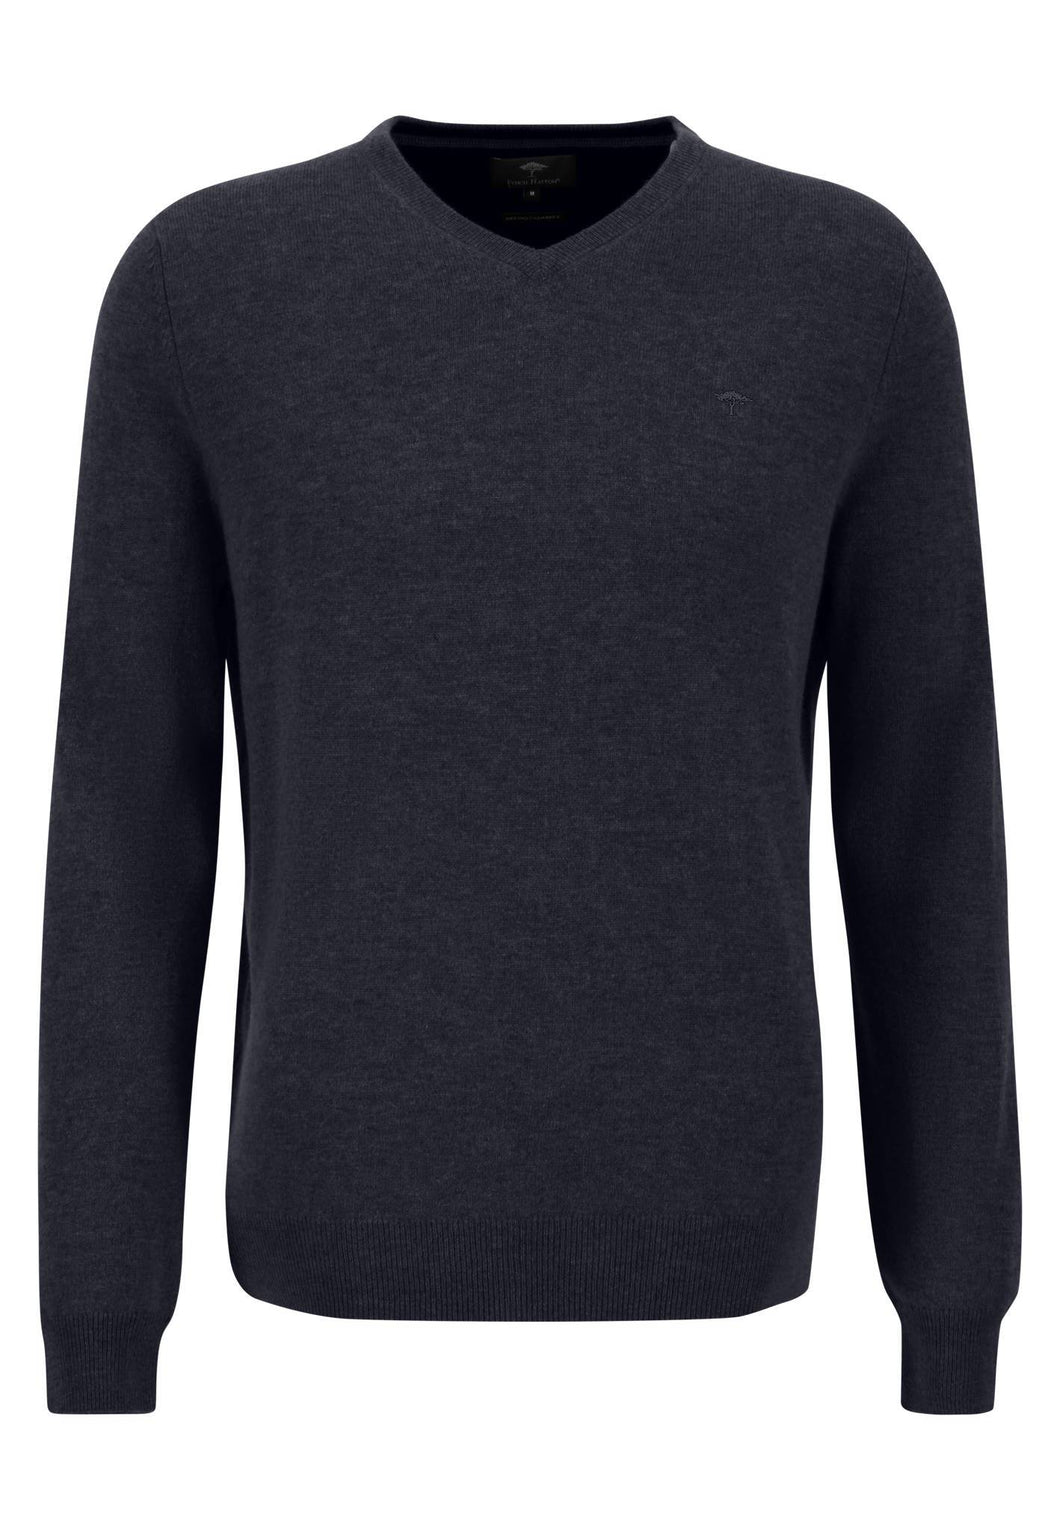 New Fynch Hatton Cashmere/Merino Navy V Neck Sweater